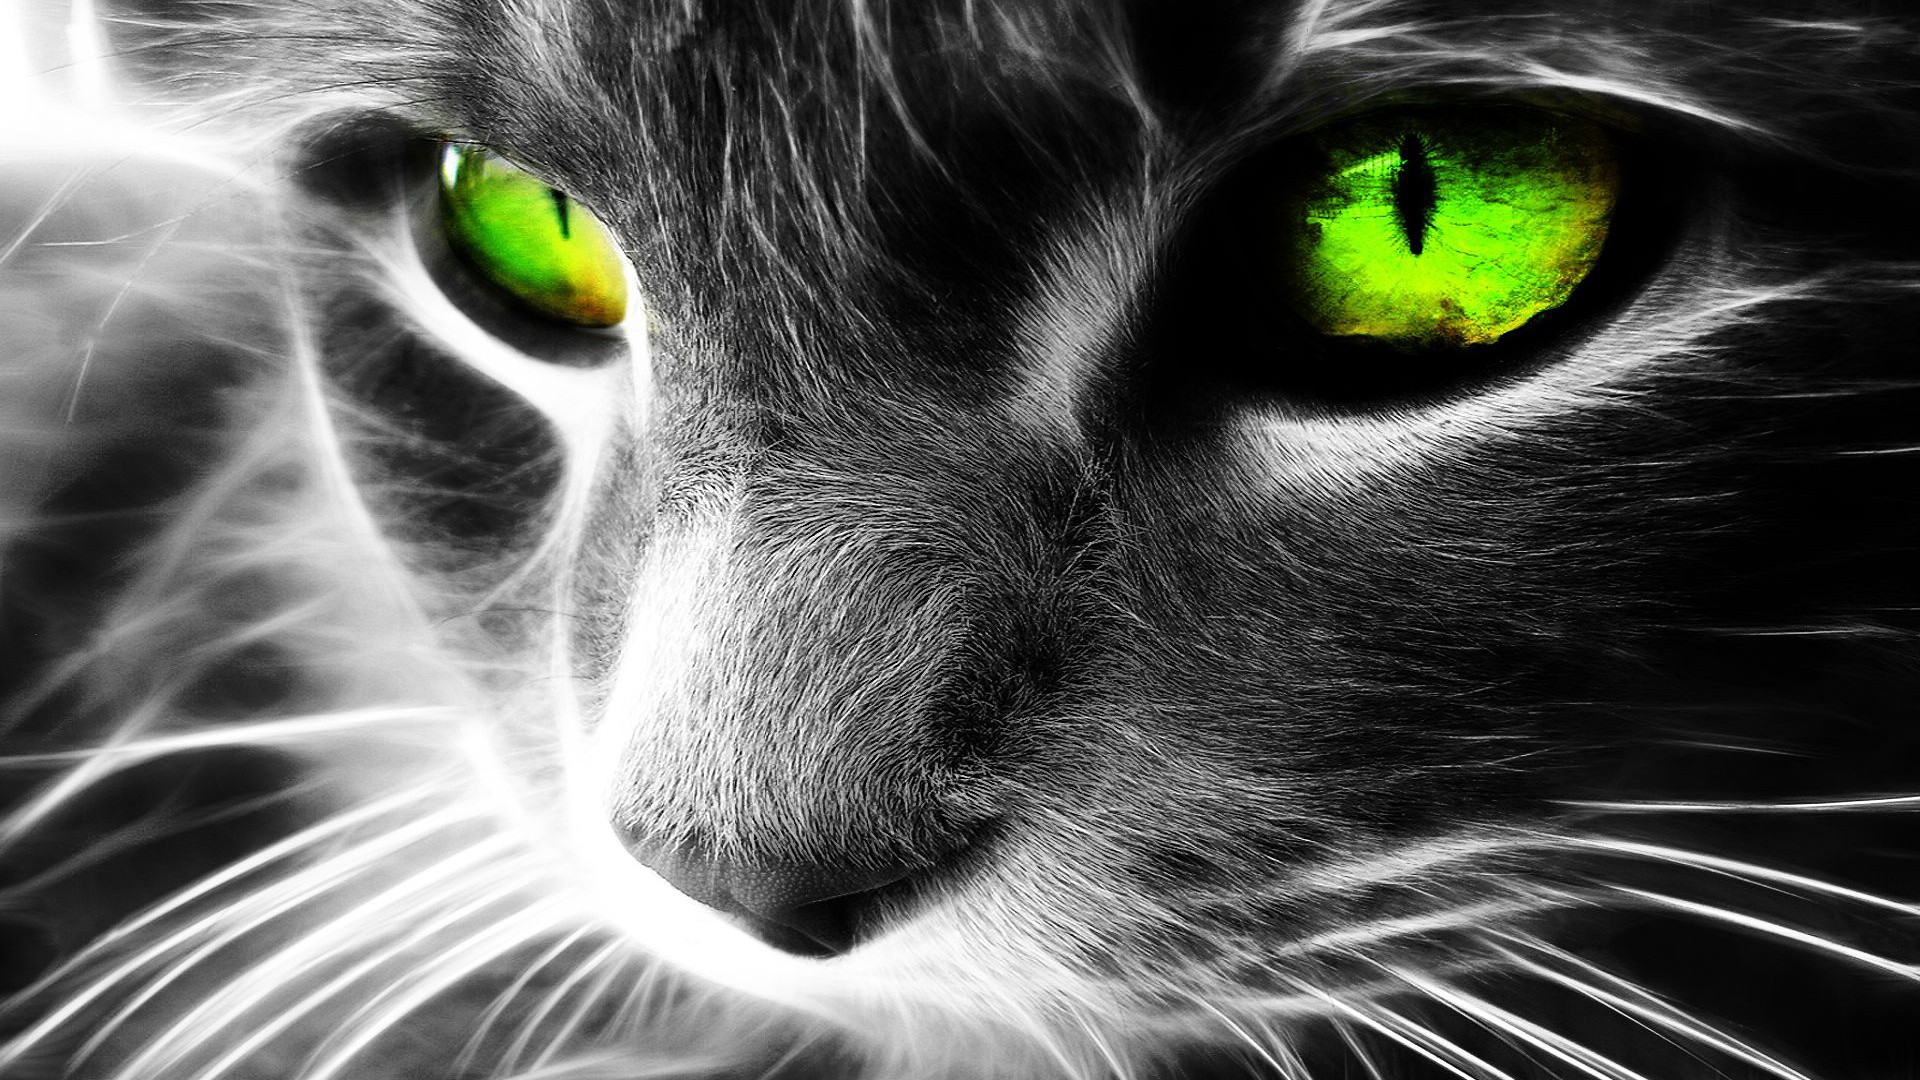 General 1920x1080 cats Fractalius green eyes digital art animals mammals animal eyes